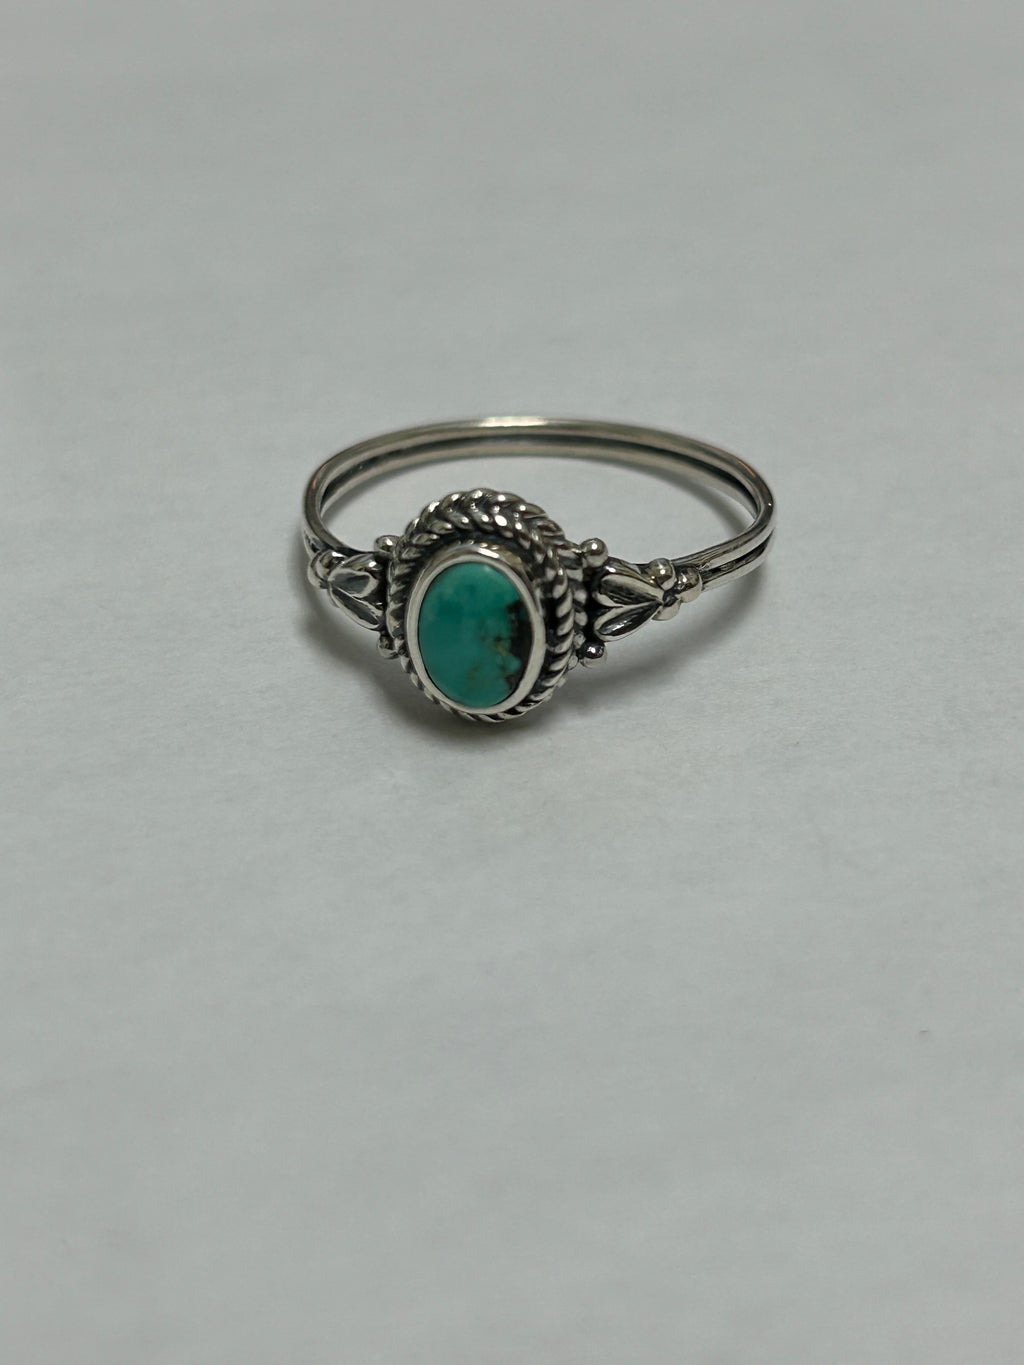 Turquoise Ring $54 - Lighten Up Shop